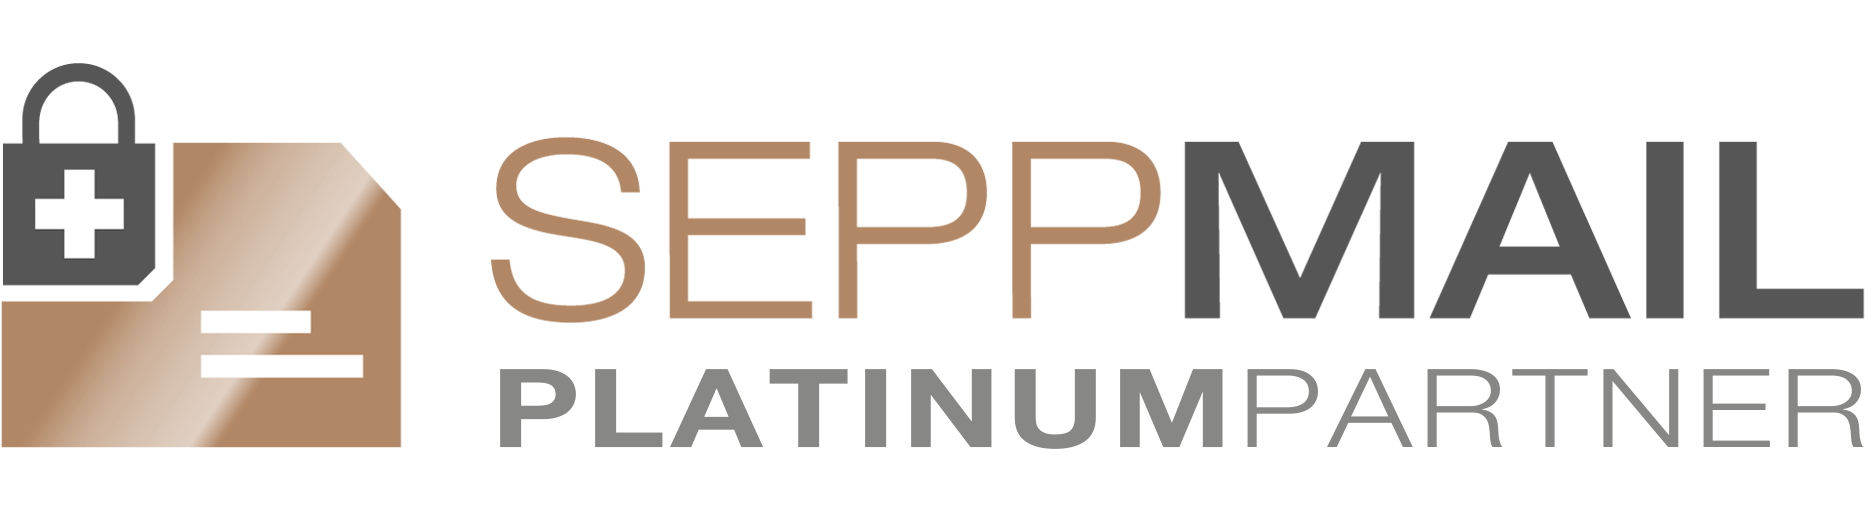 SEPPmail PLATINUM Partner